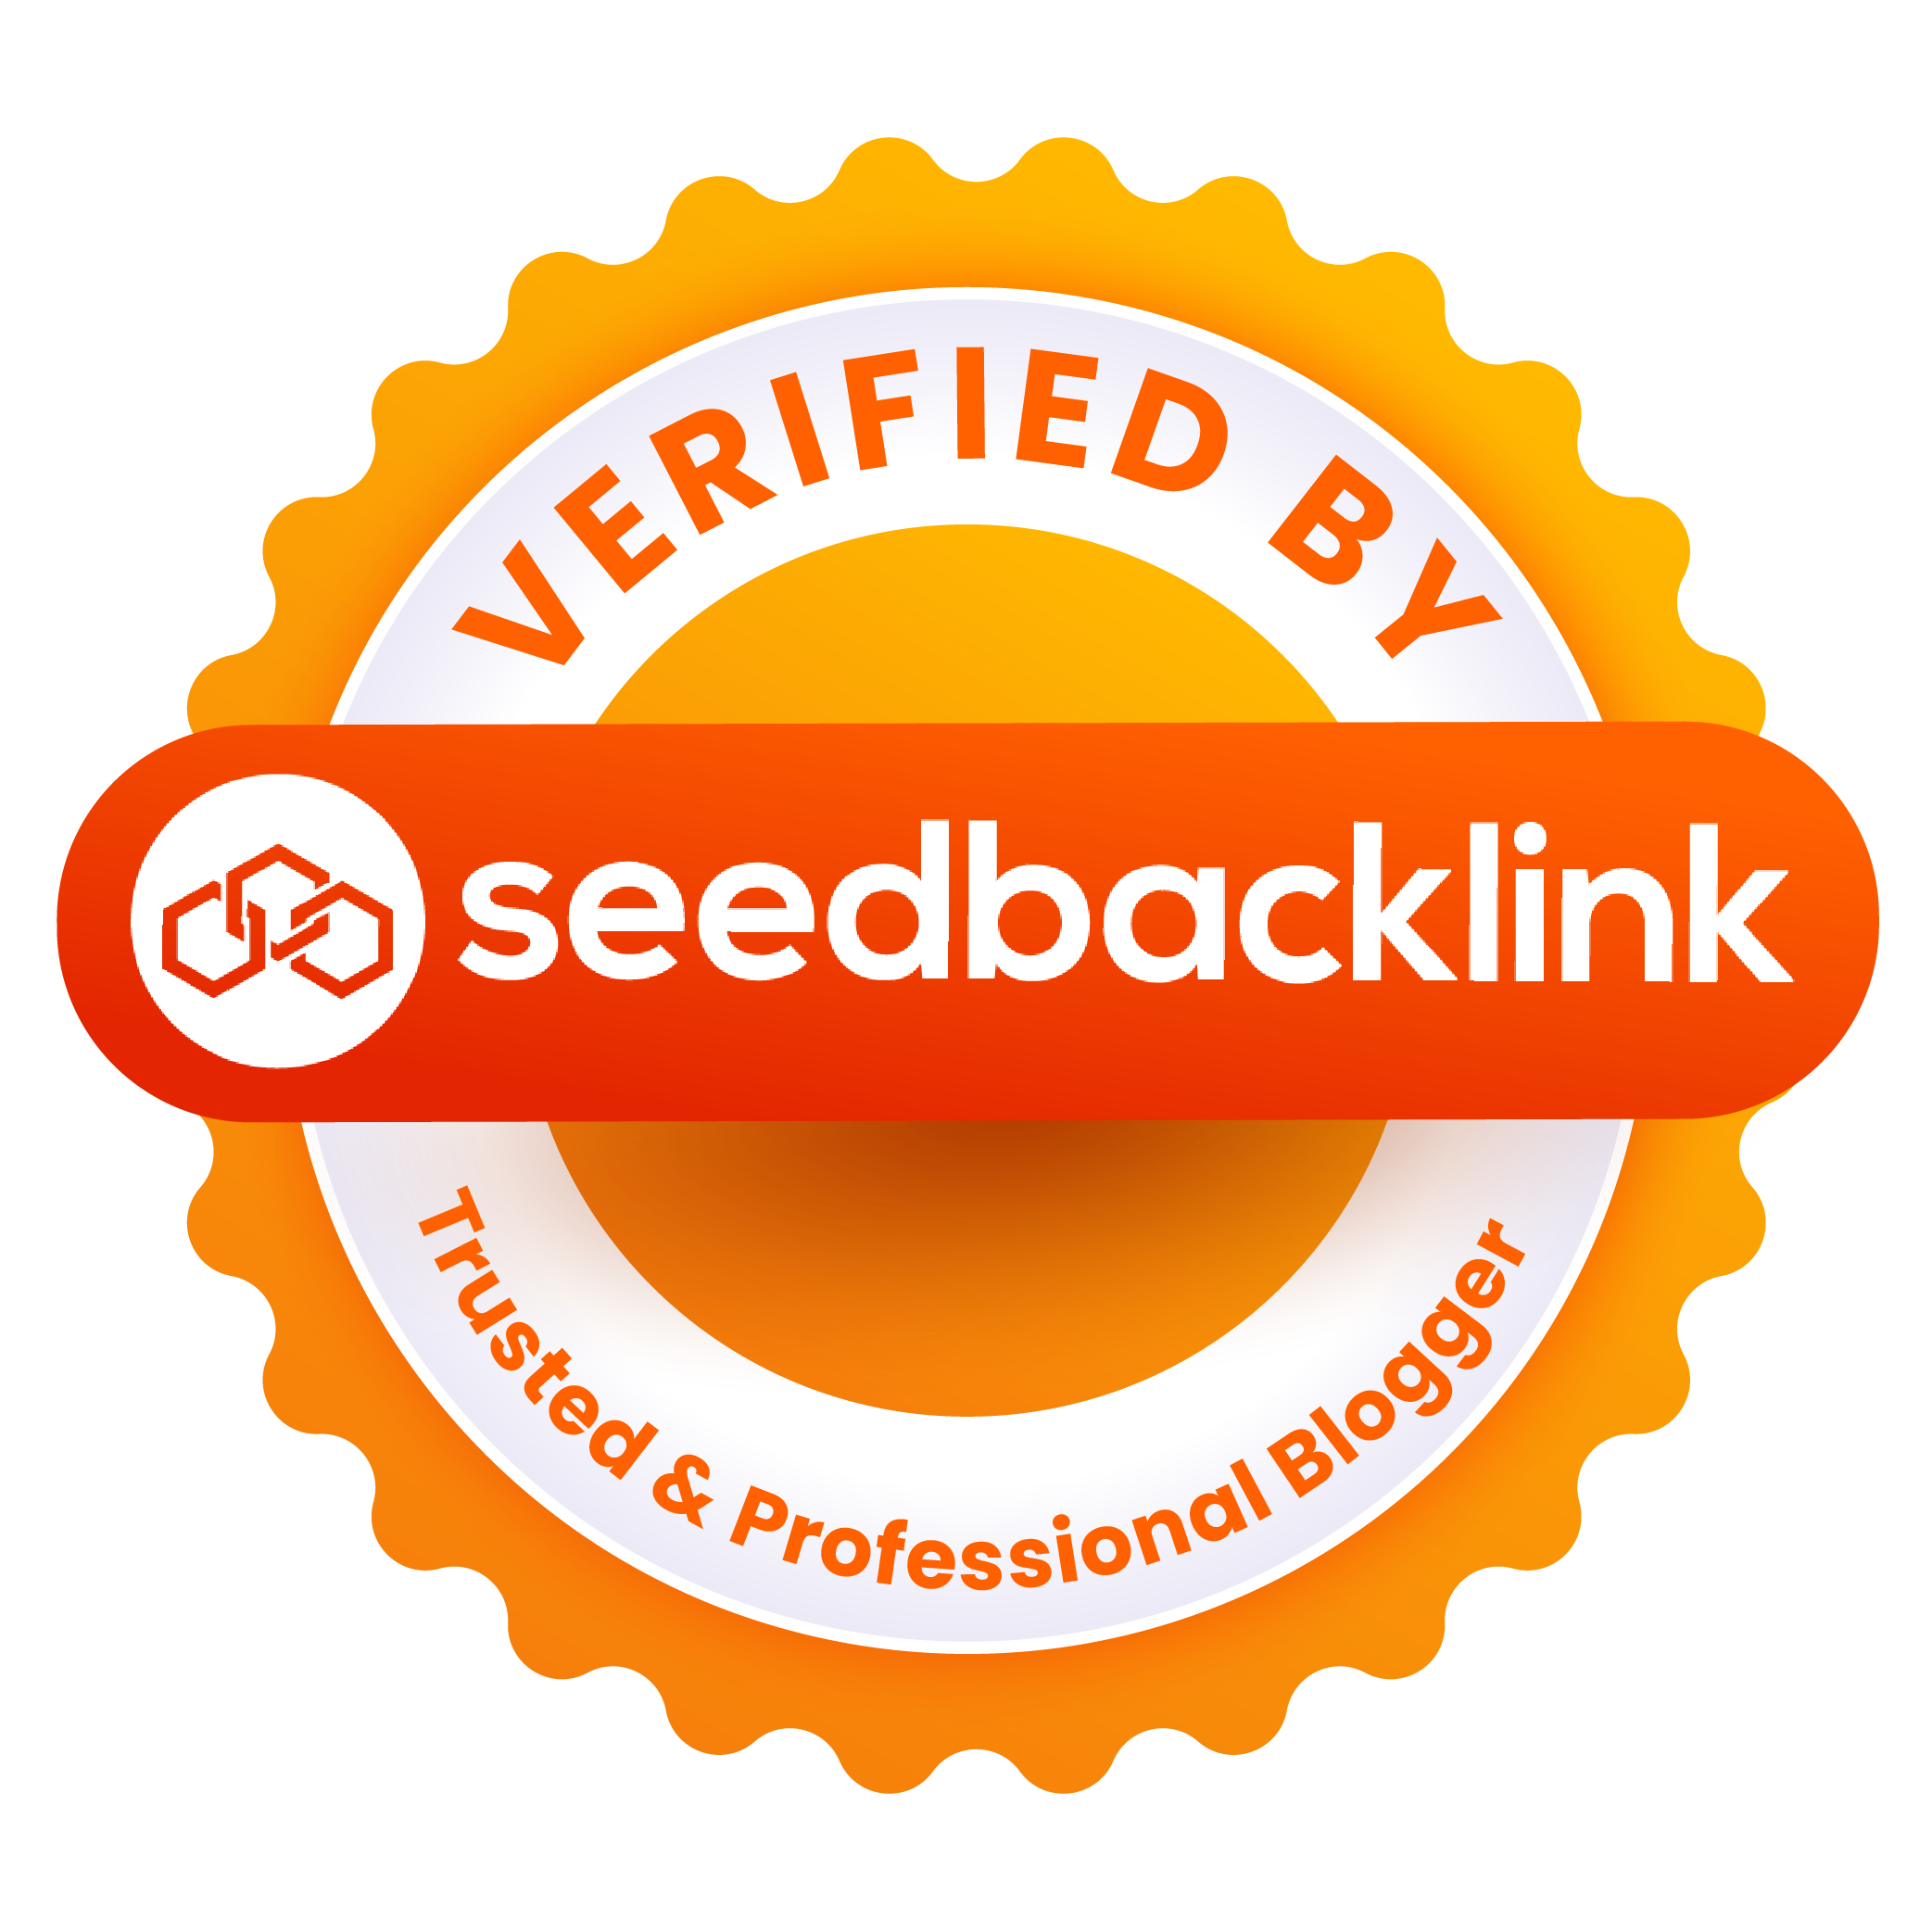 Seedbacklink.com